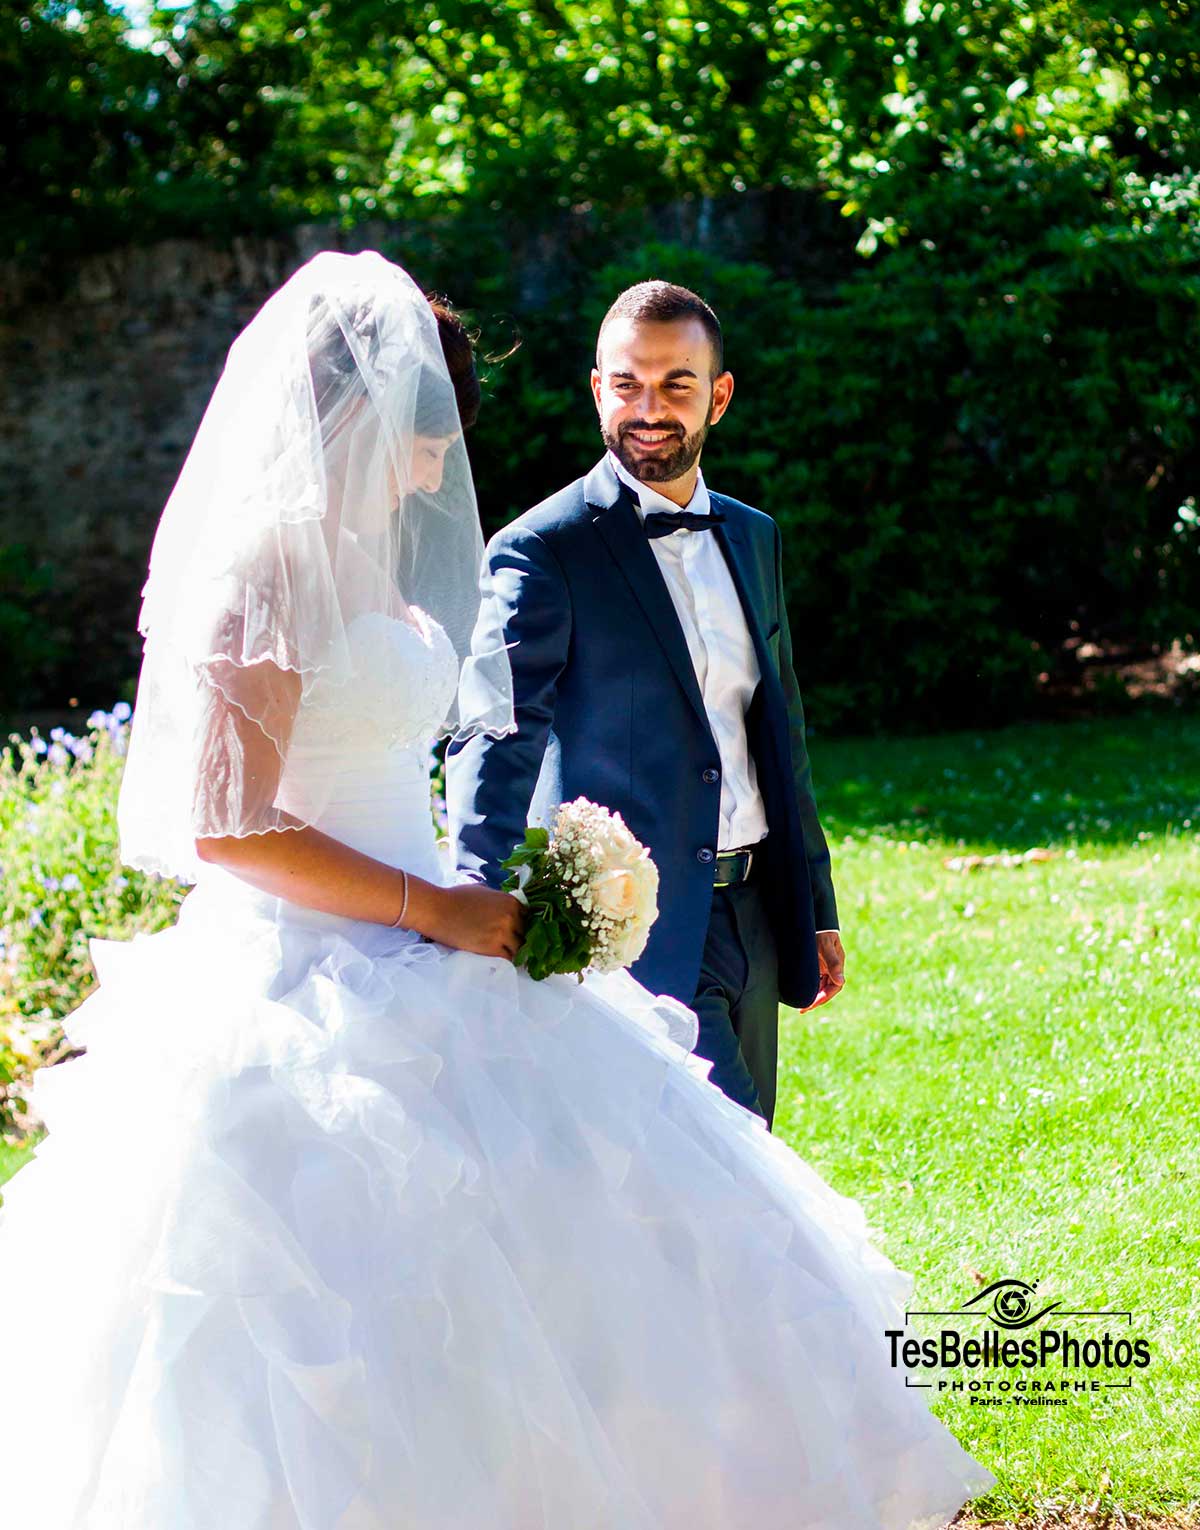 Photo mariage à Rambouillet, photographe de mariage Rambouillet et en Yvelines